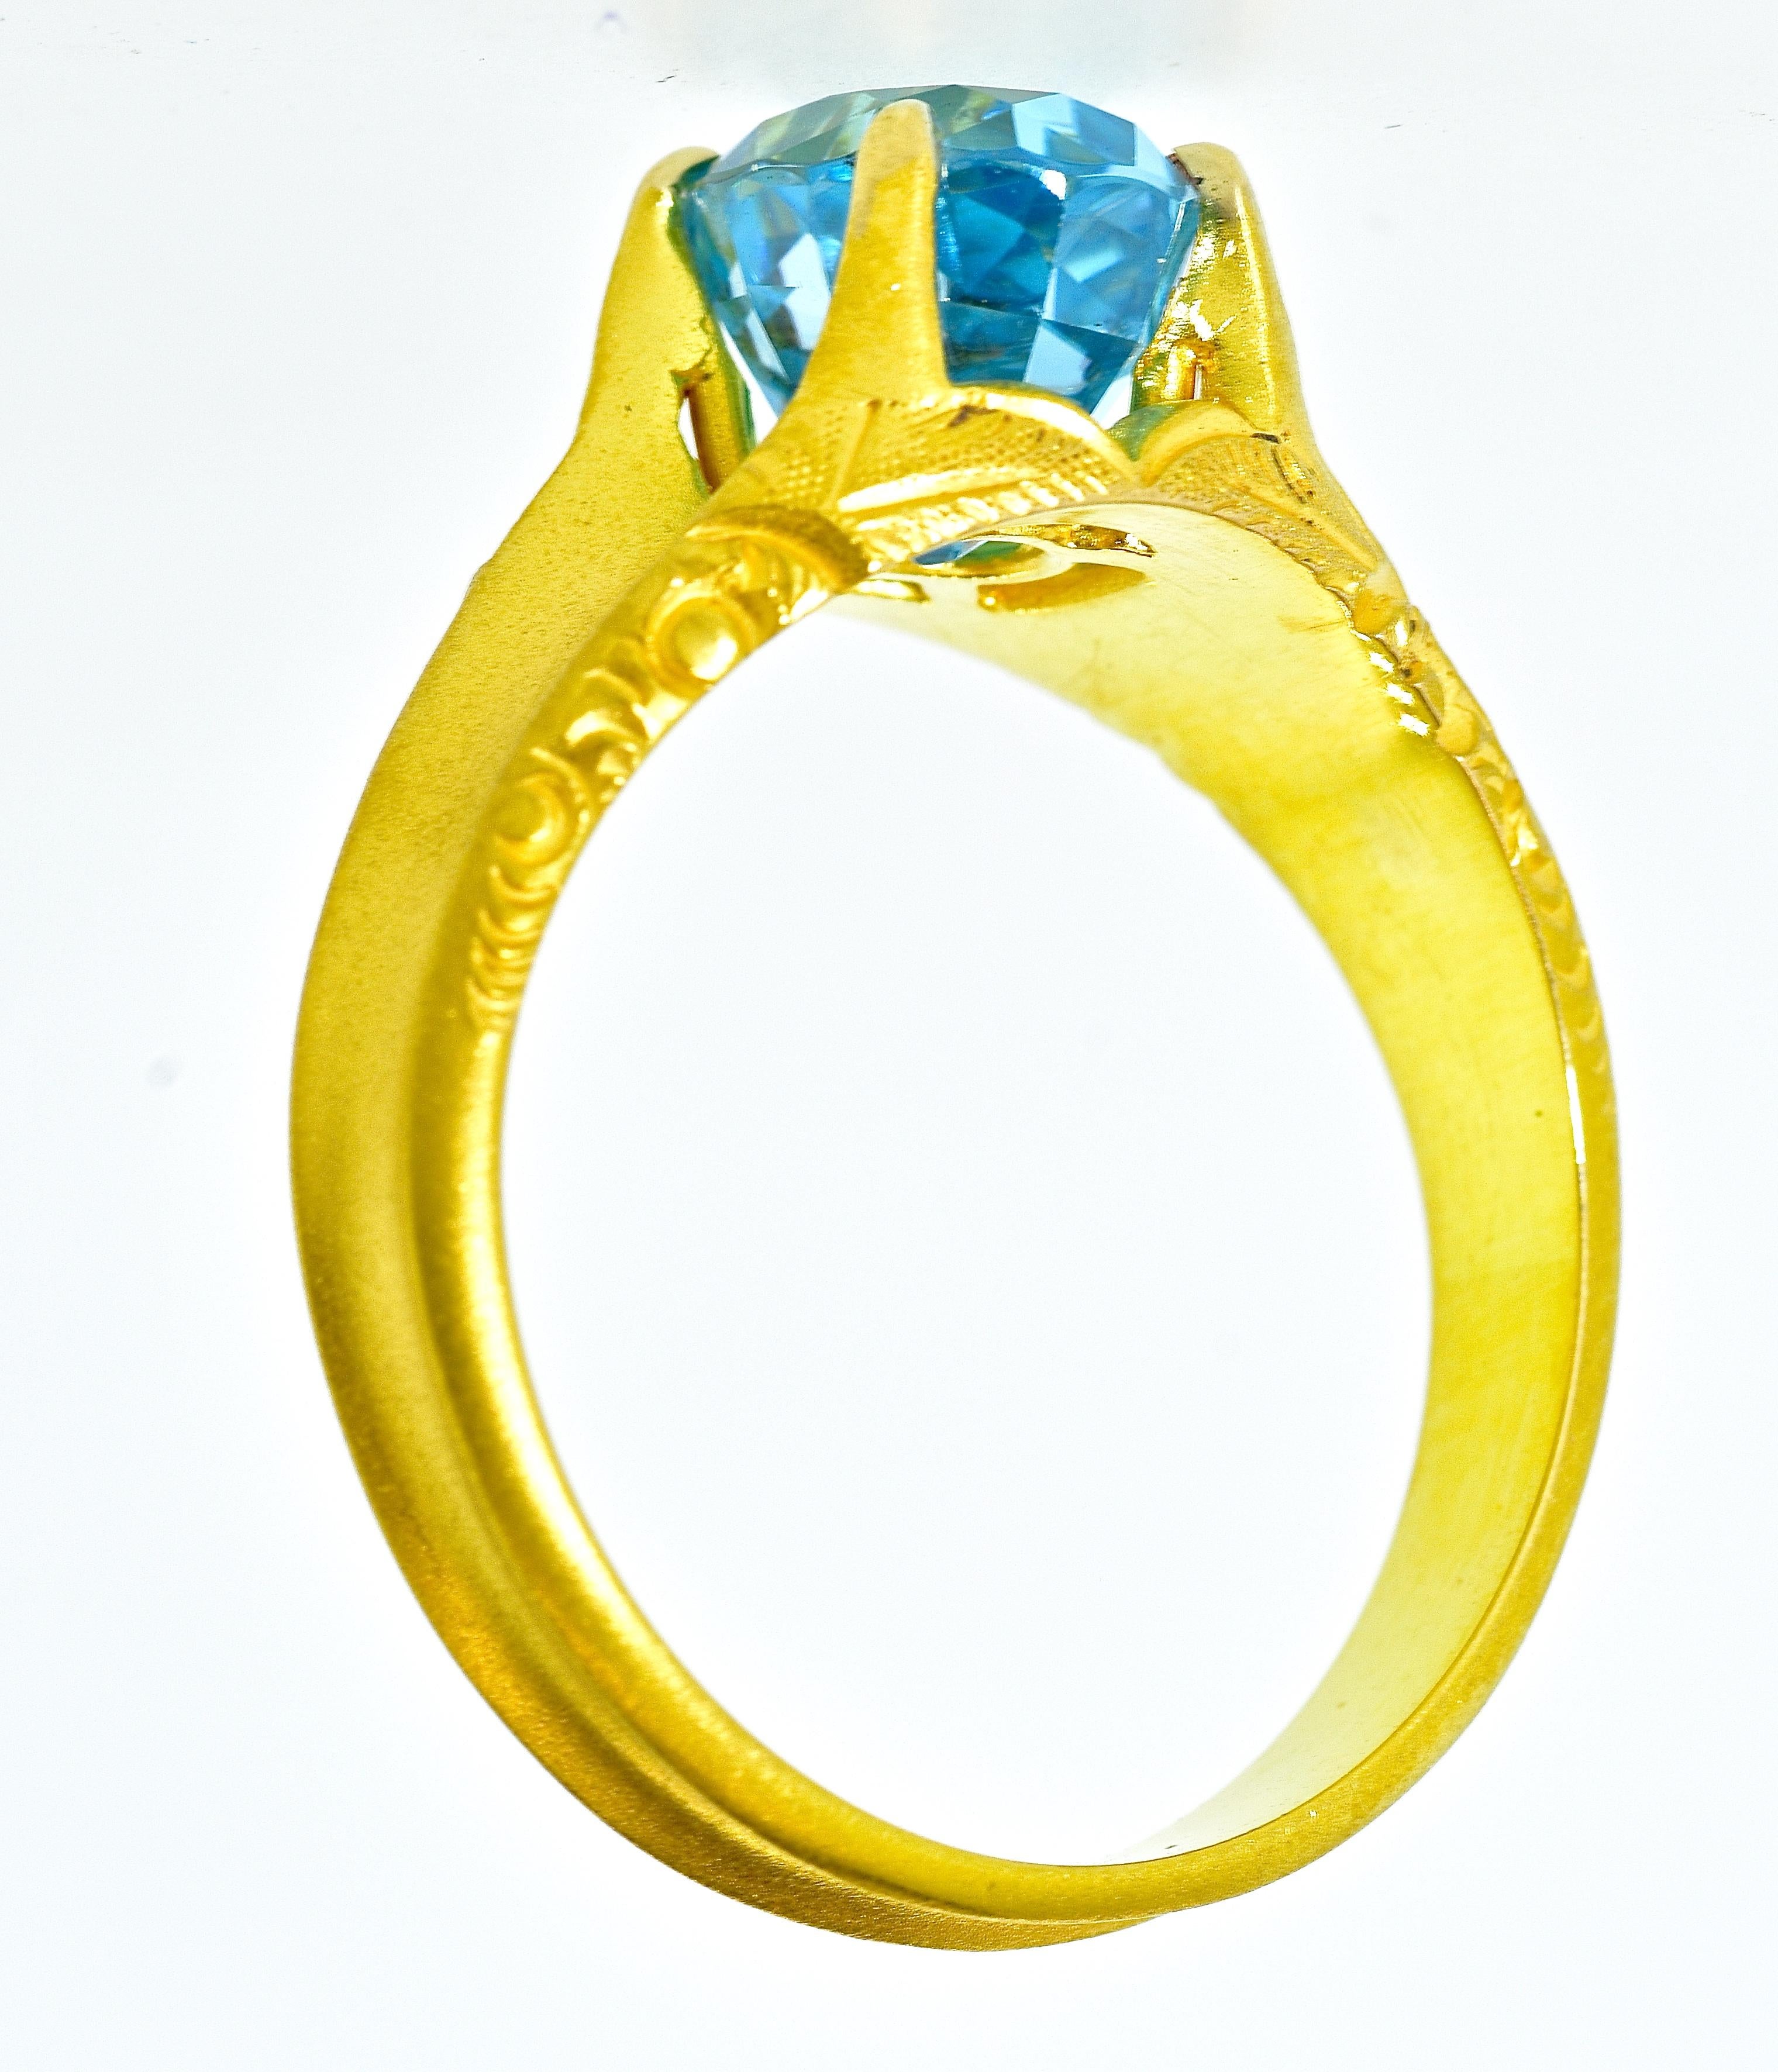 Women's or Men's Victorian Gold Ring Centering a Natural Very Fine Blue Zircon, circa 1890